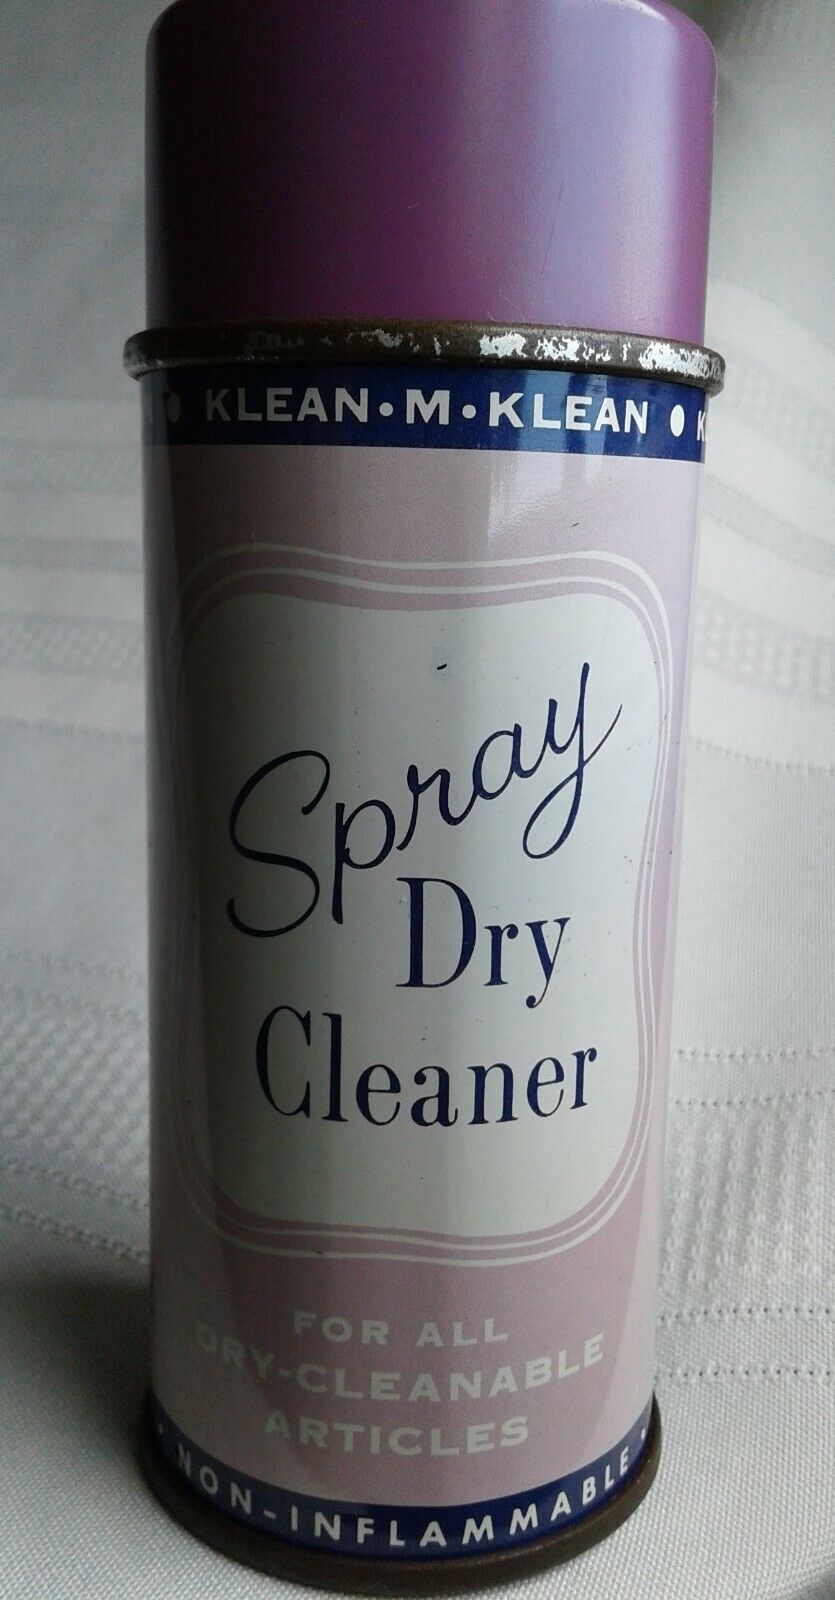 Vtg Spray Dry Cleaner Aerosol Can KLEAN-M-KLEAN Edison Bro Store Inc St Louis MO